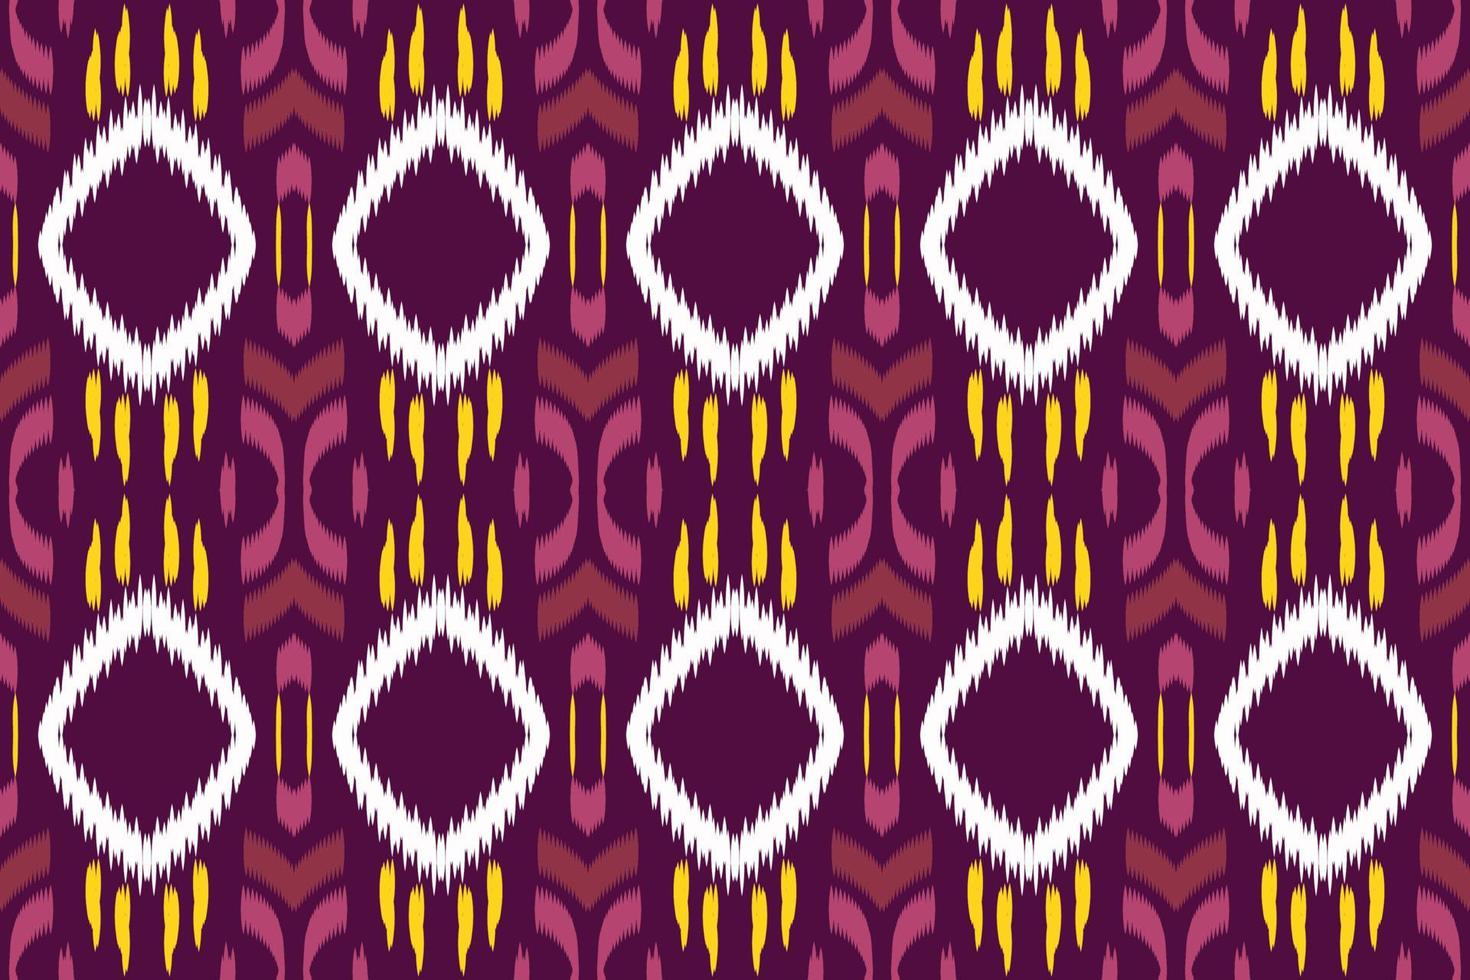 motivo ikat disegni tribale arte Borneo scandinavo batik boemo struttura digitale vettore design per Stampa saree Kurti tessuto spazzola simboli campioni